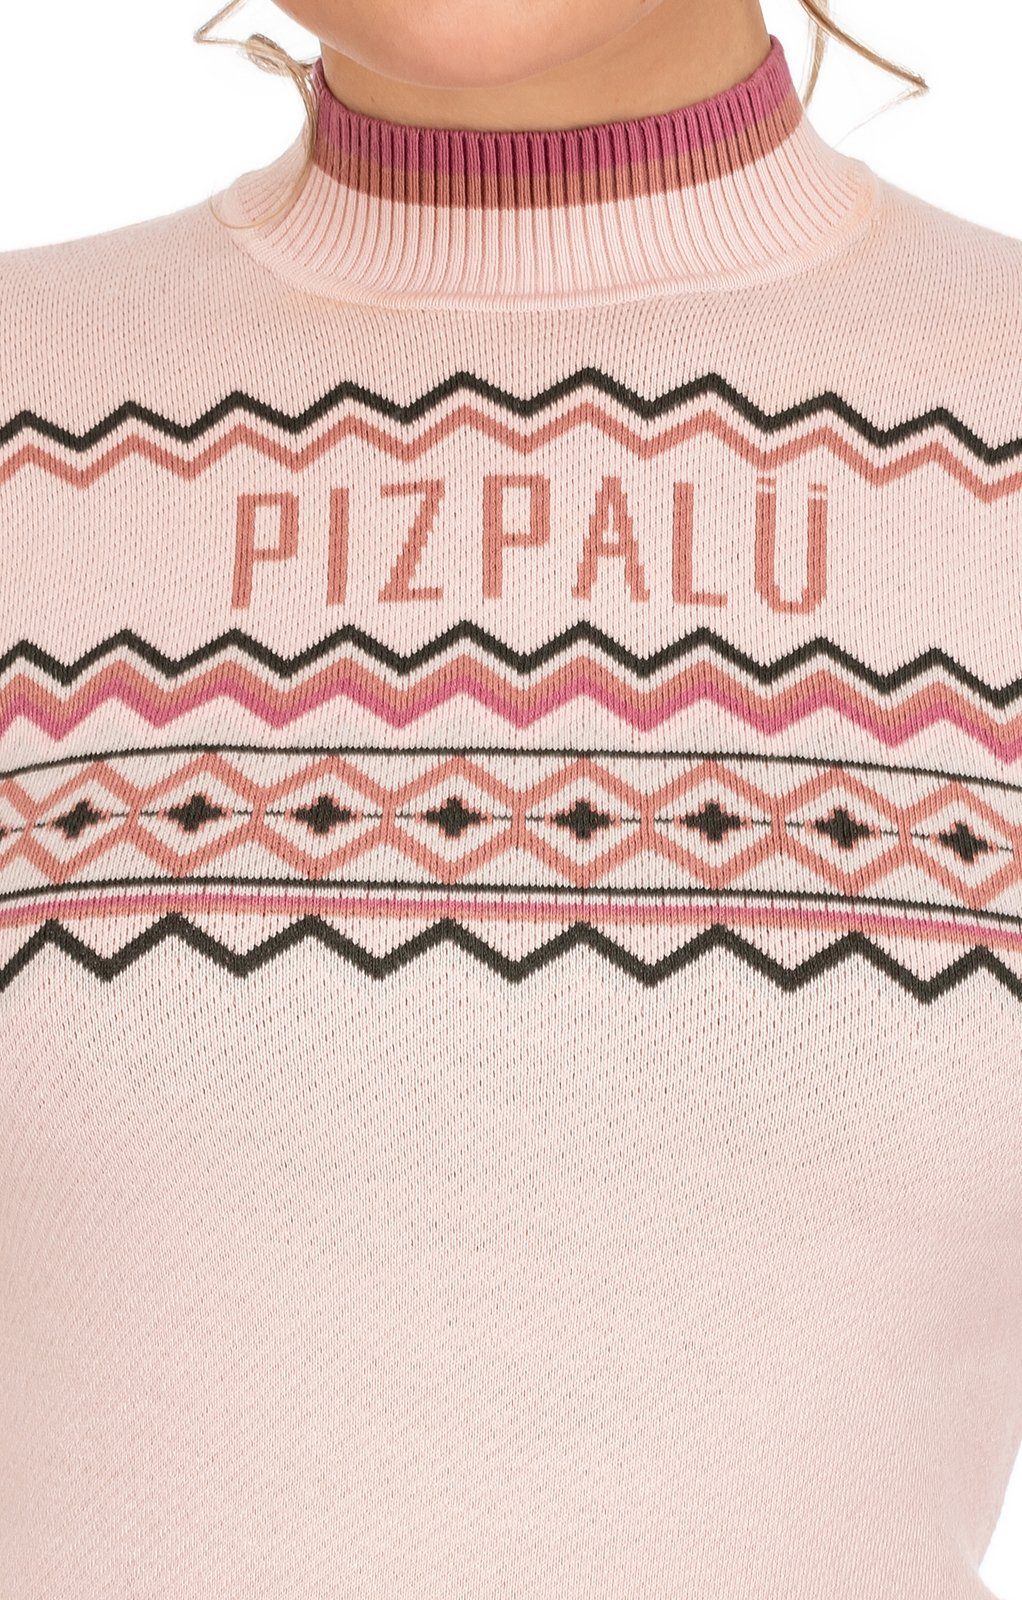 Piz Palü Trachtenjacke Pullover PATERSDORFrosa